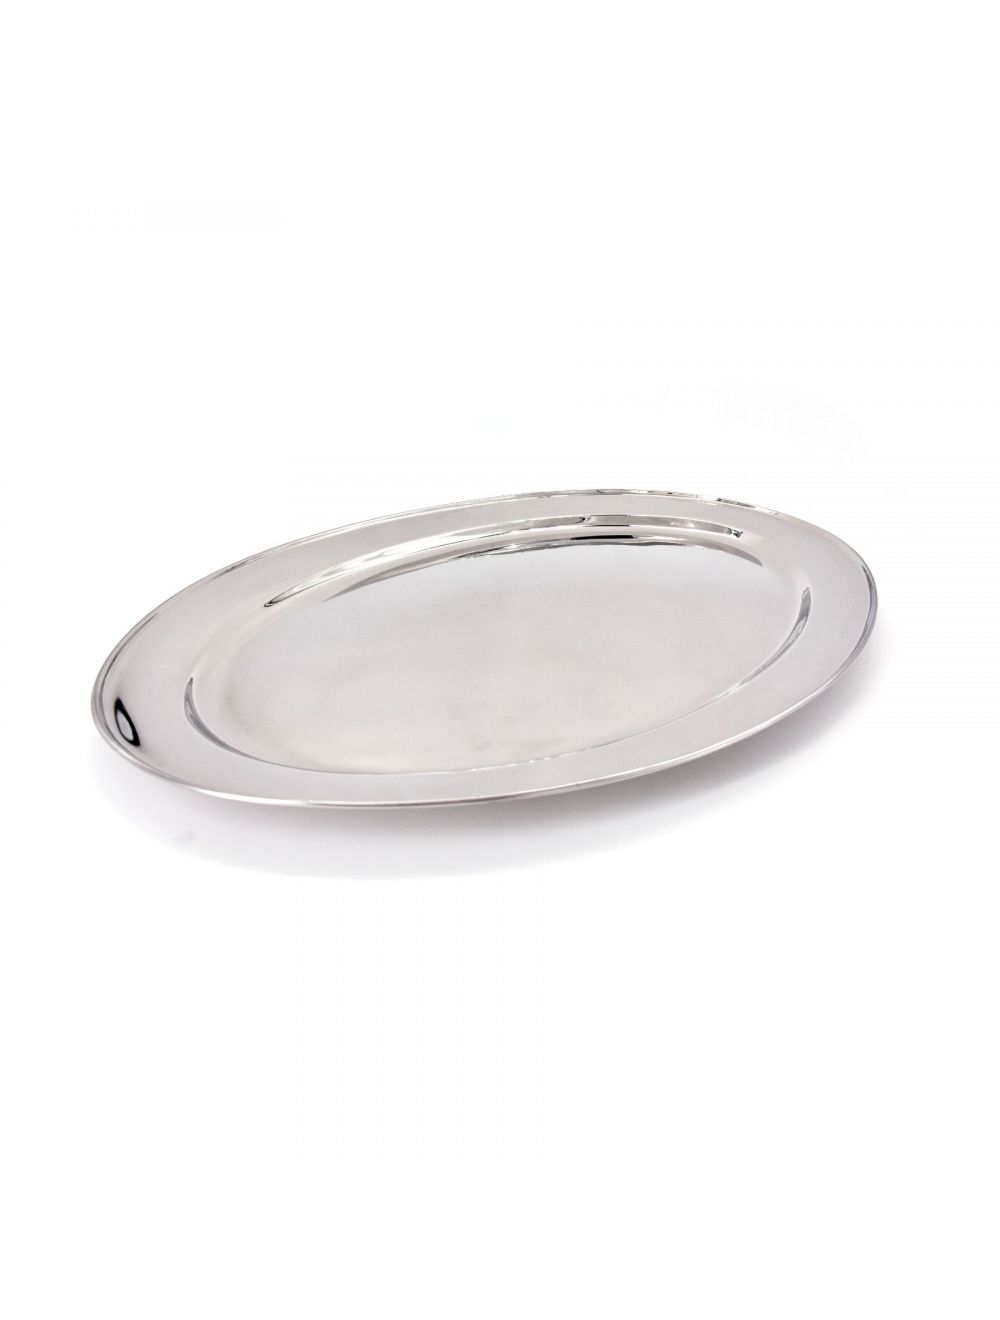 Silver Oval Platter 60 cm